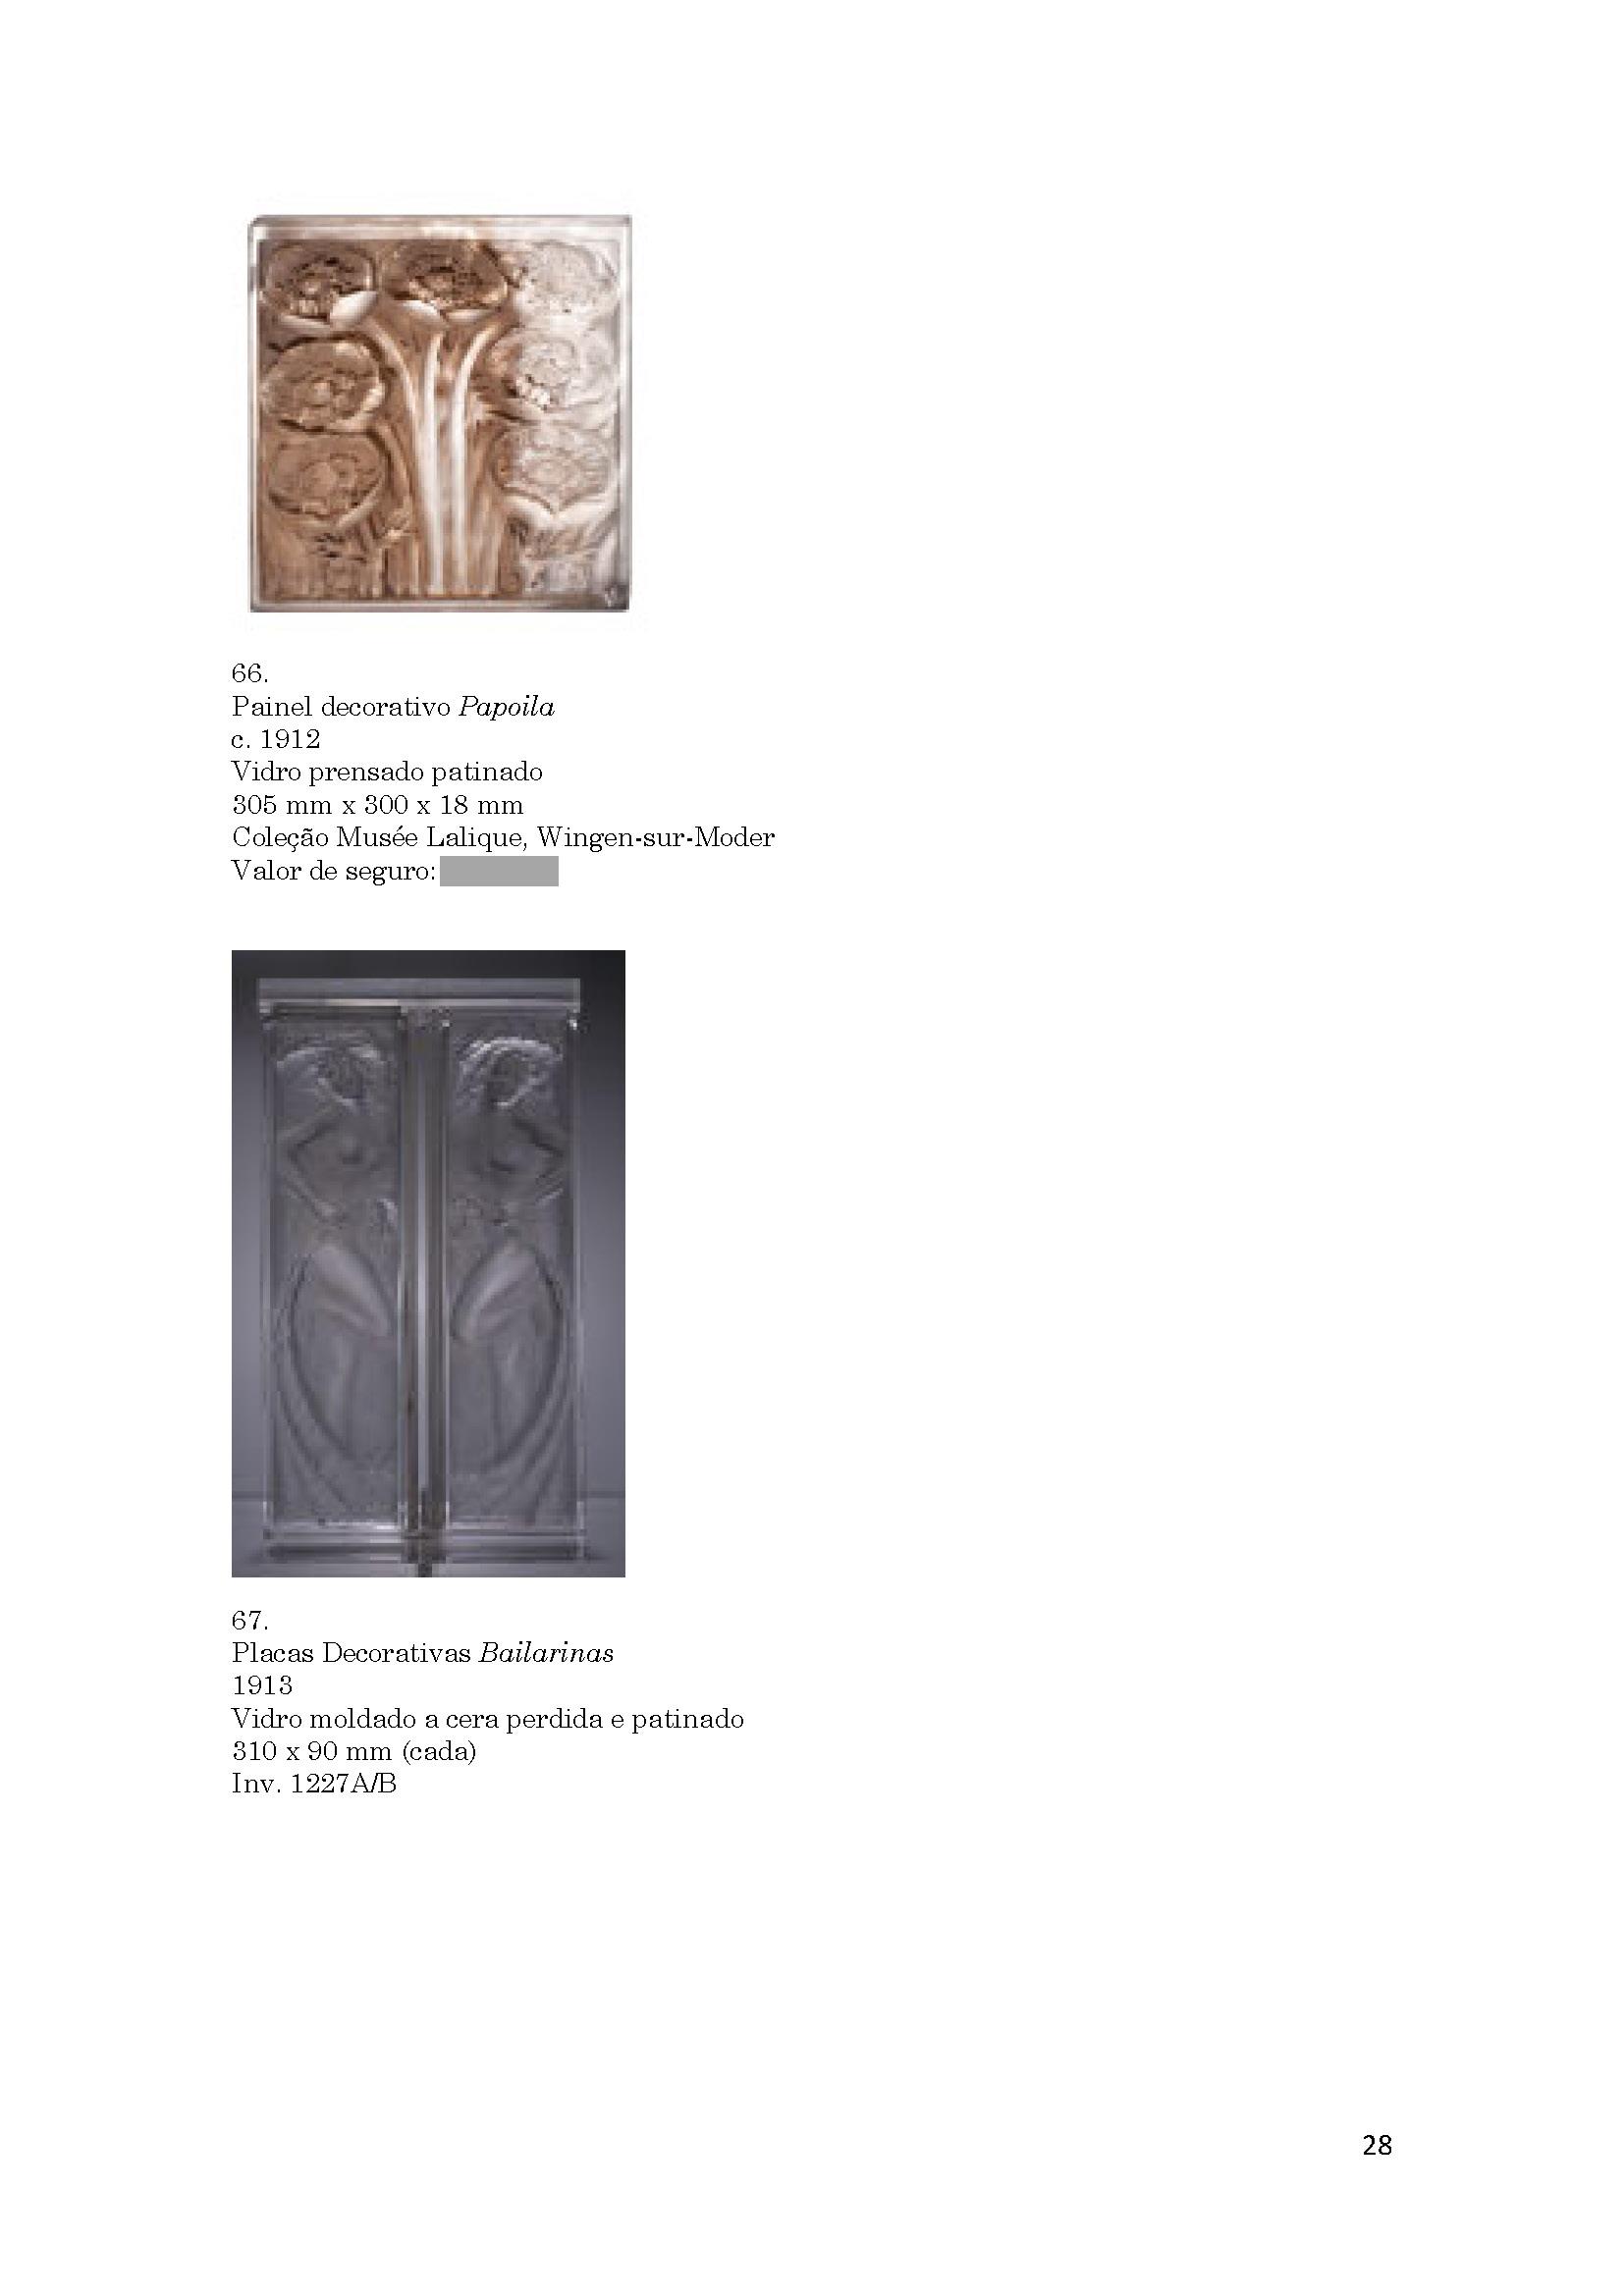 Lista_Vidros_Lalique_25.09.2020_1.28